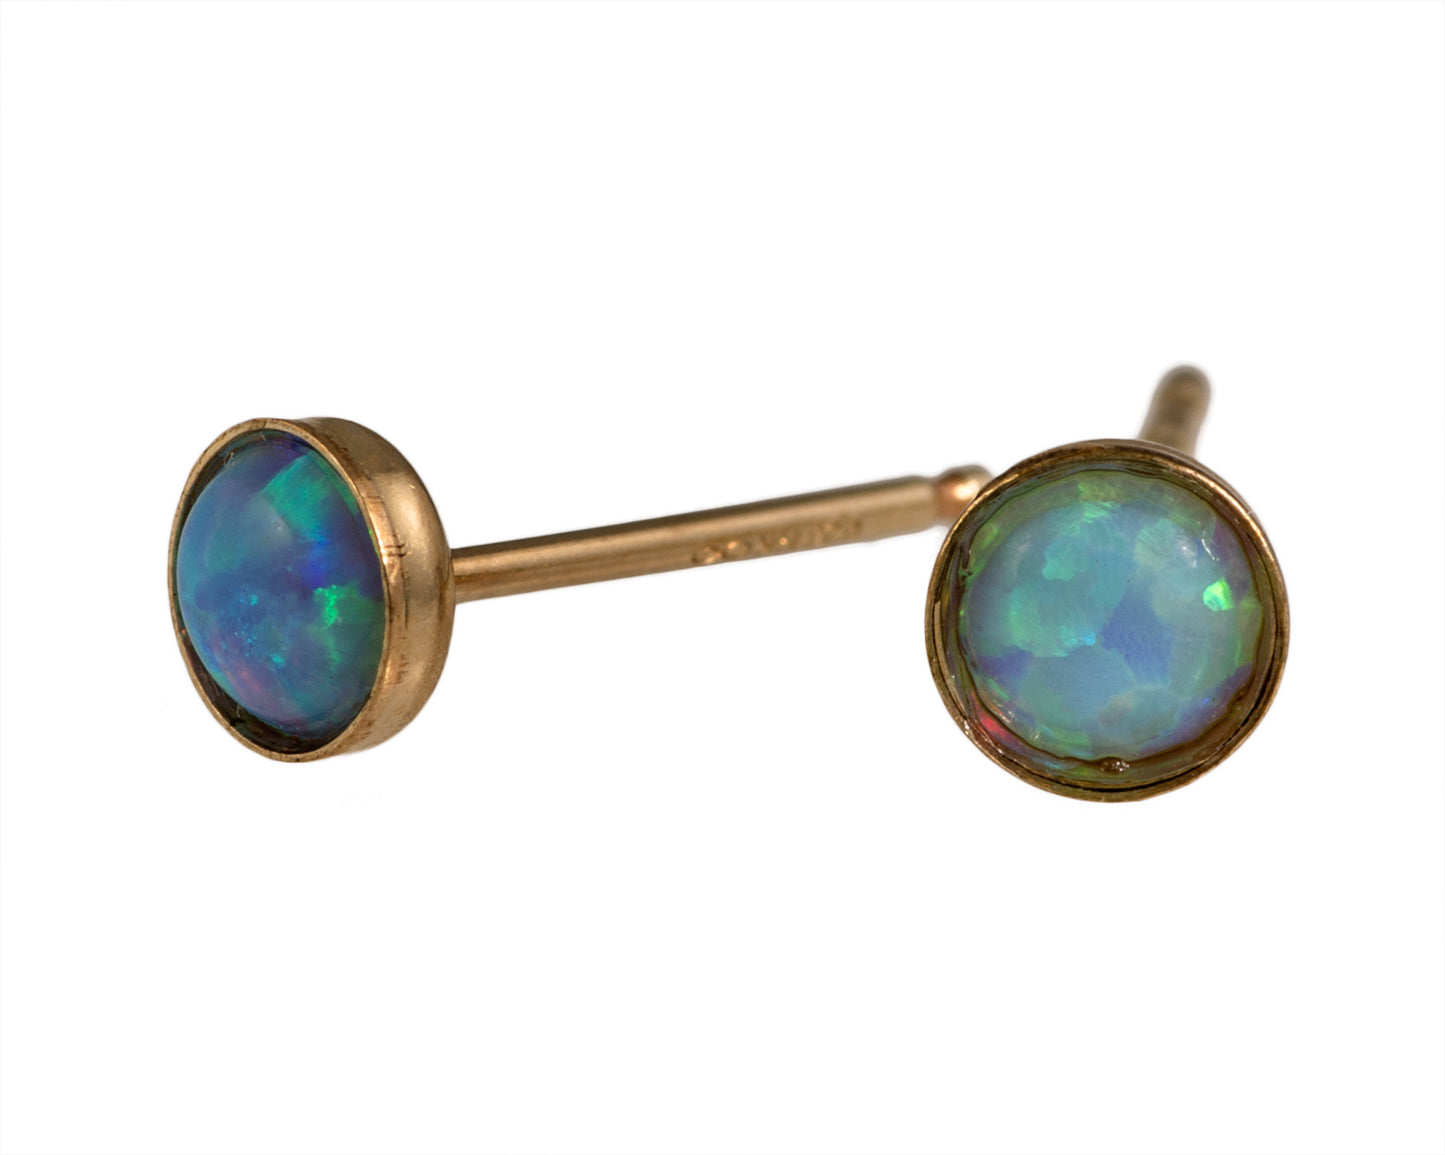 Classic opal stud earrings